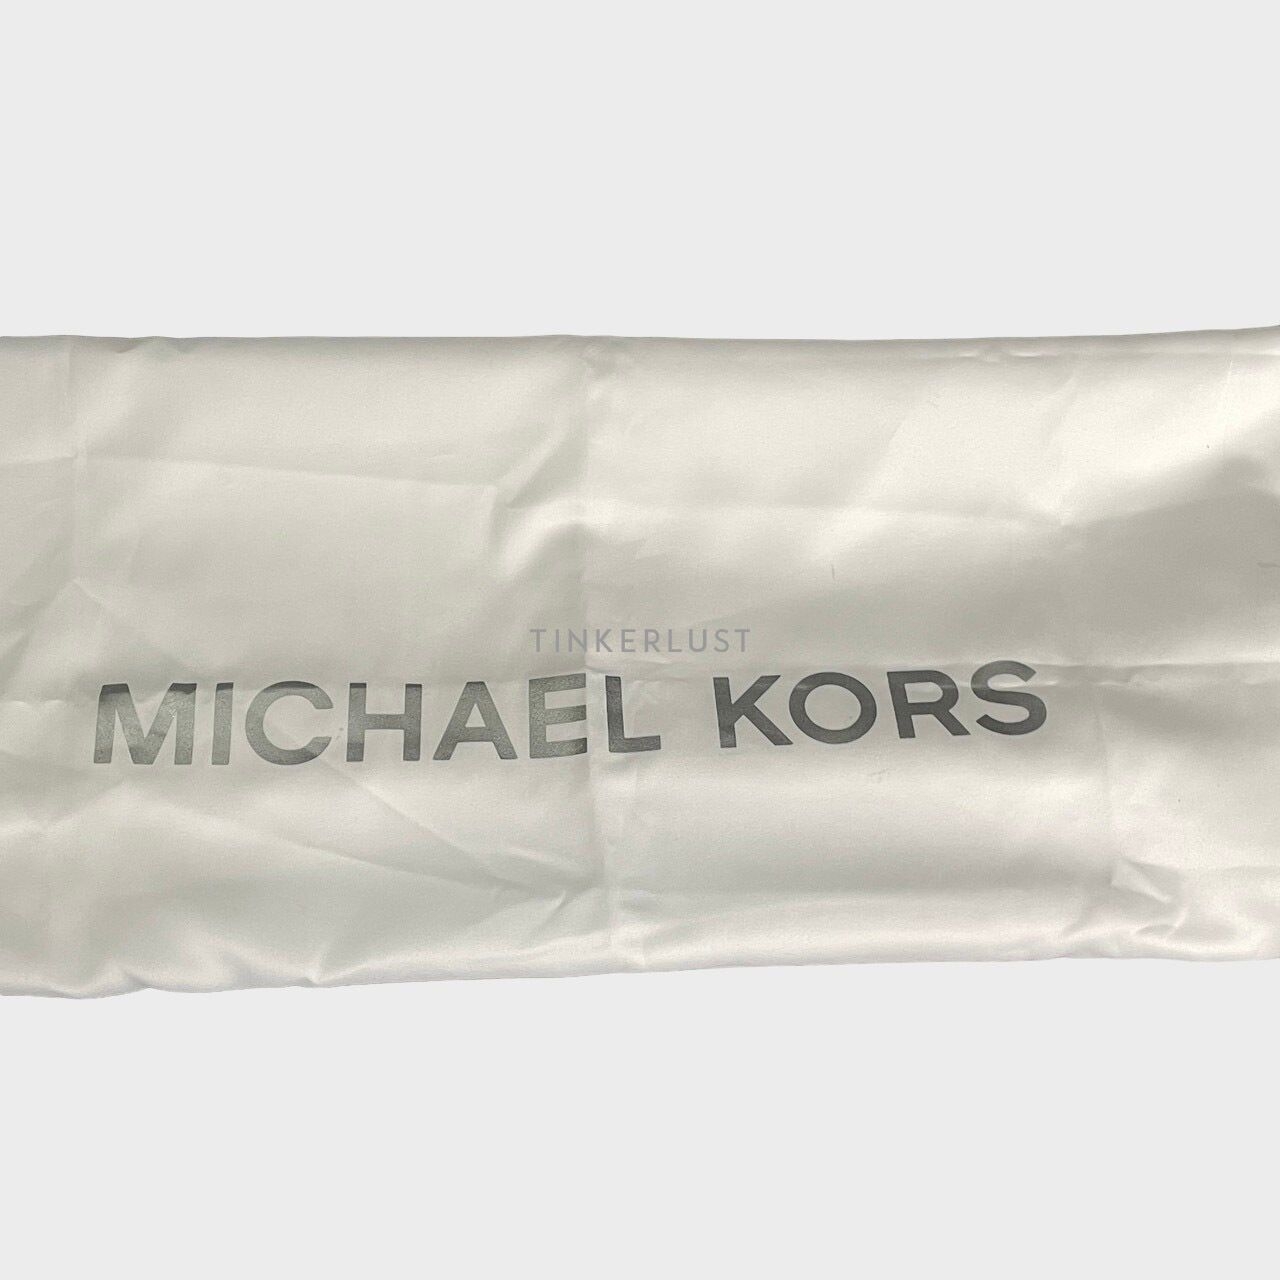 Michael Kors Jet Set Travel Gold GHW Tote Bag